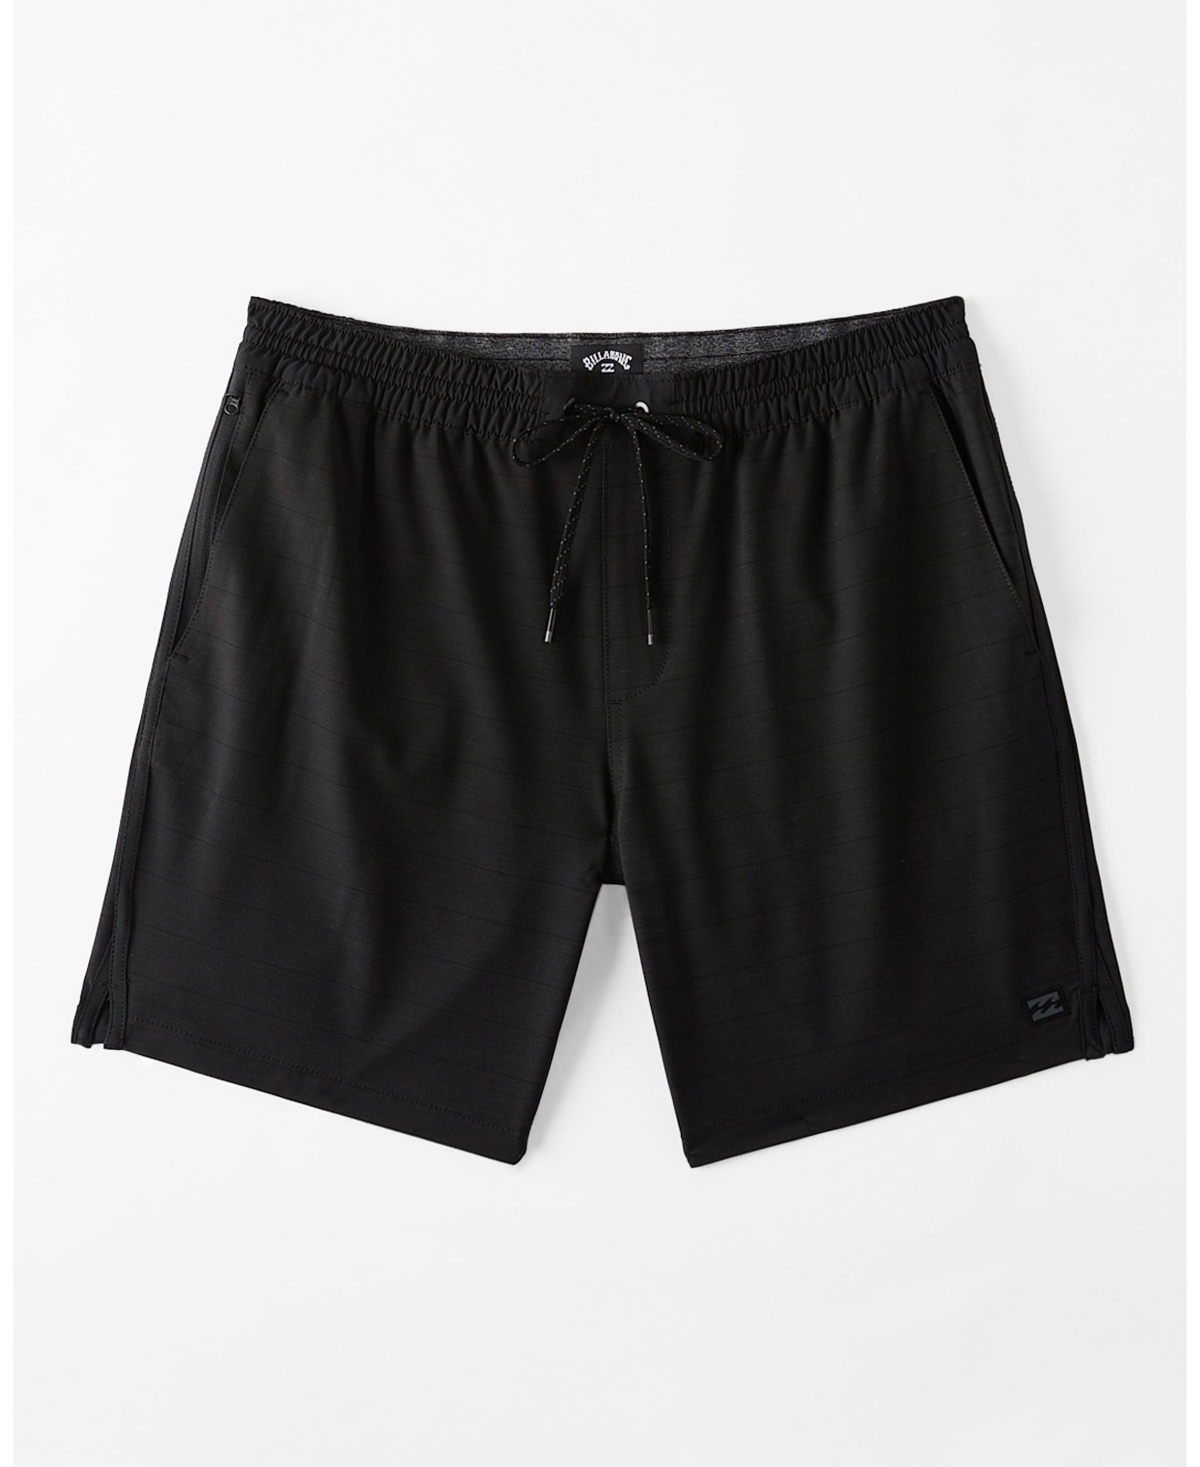 Men's Crossfire Elastic Hybrid Shorts - Black